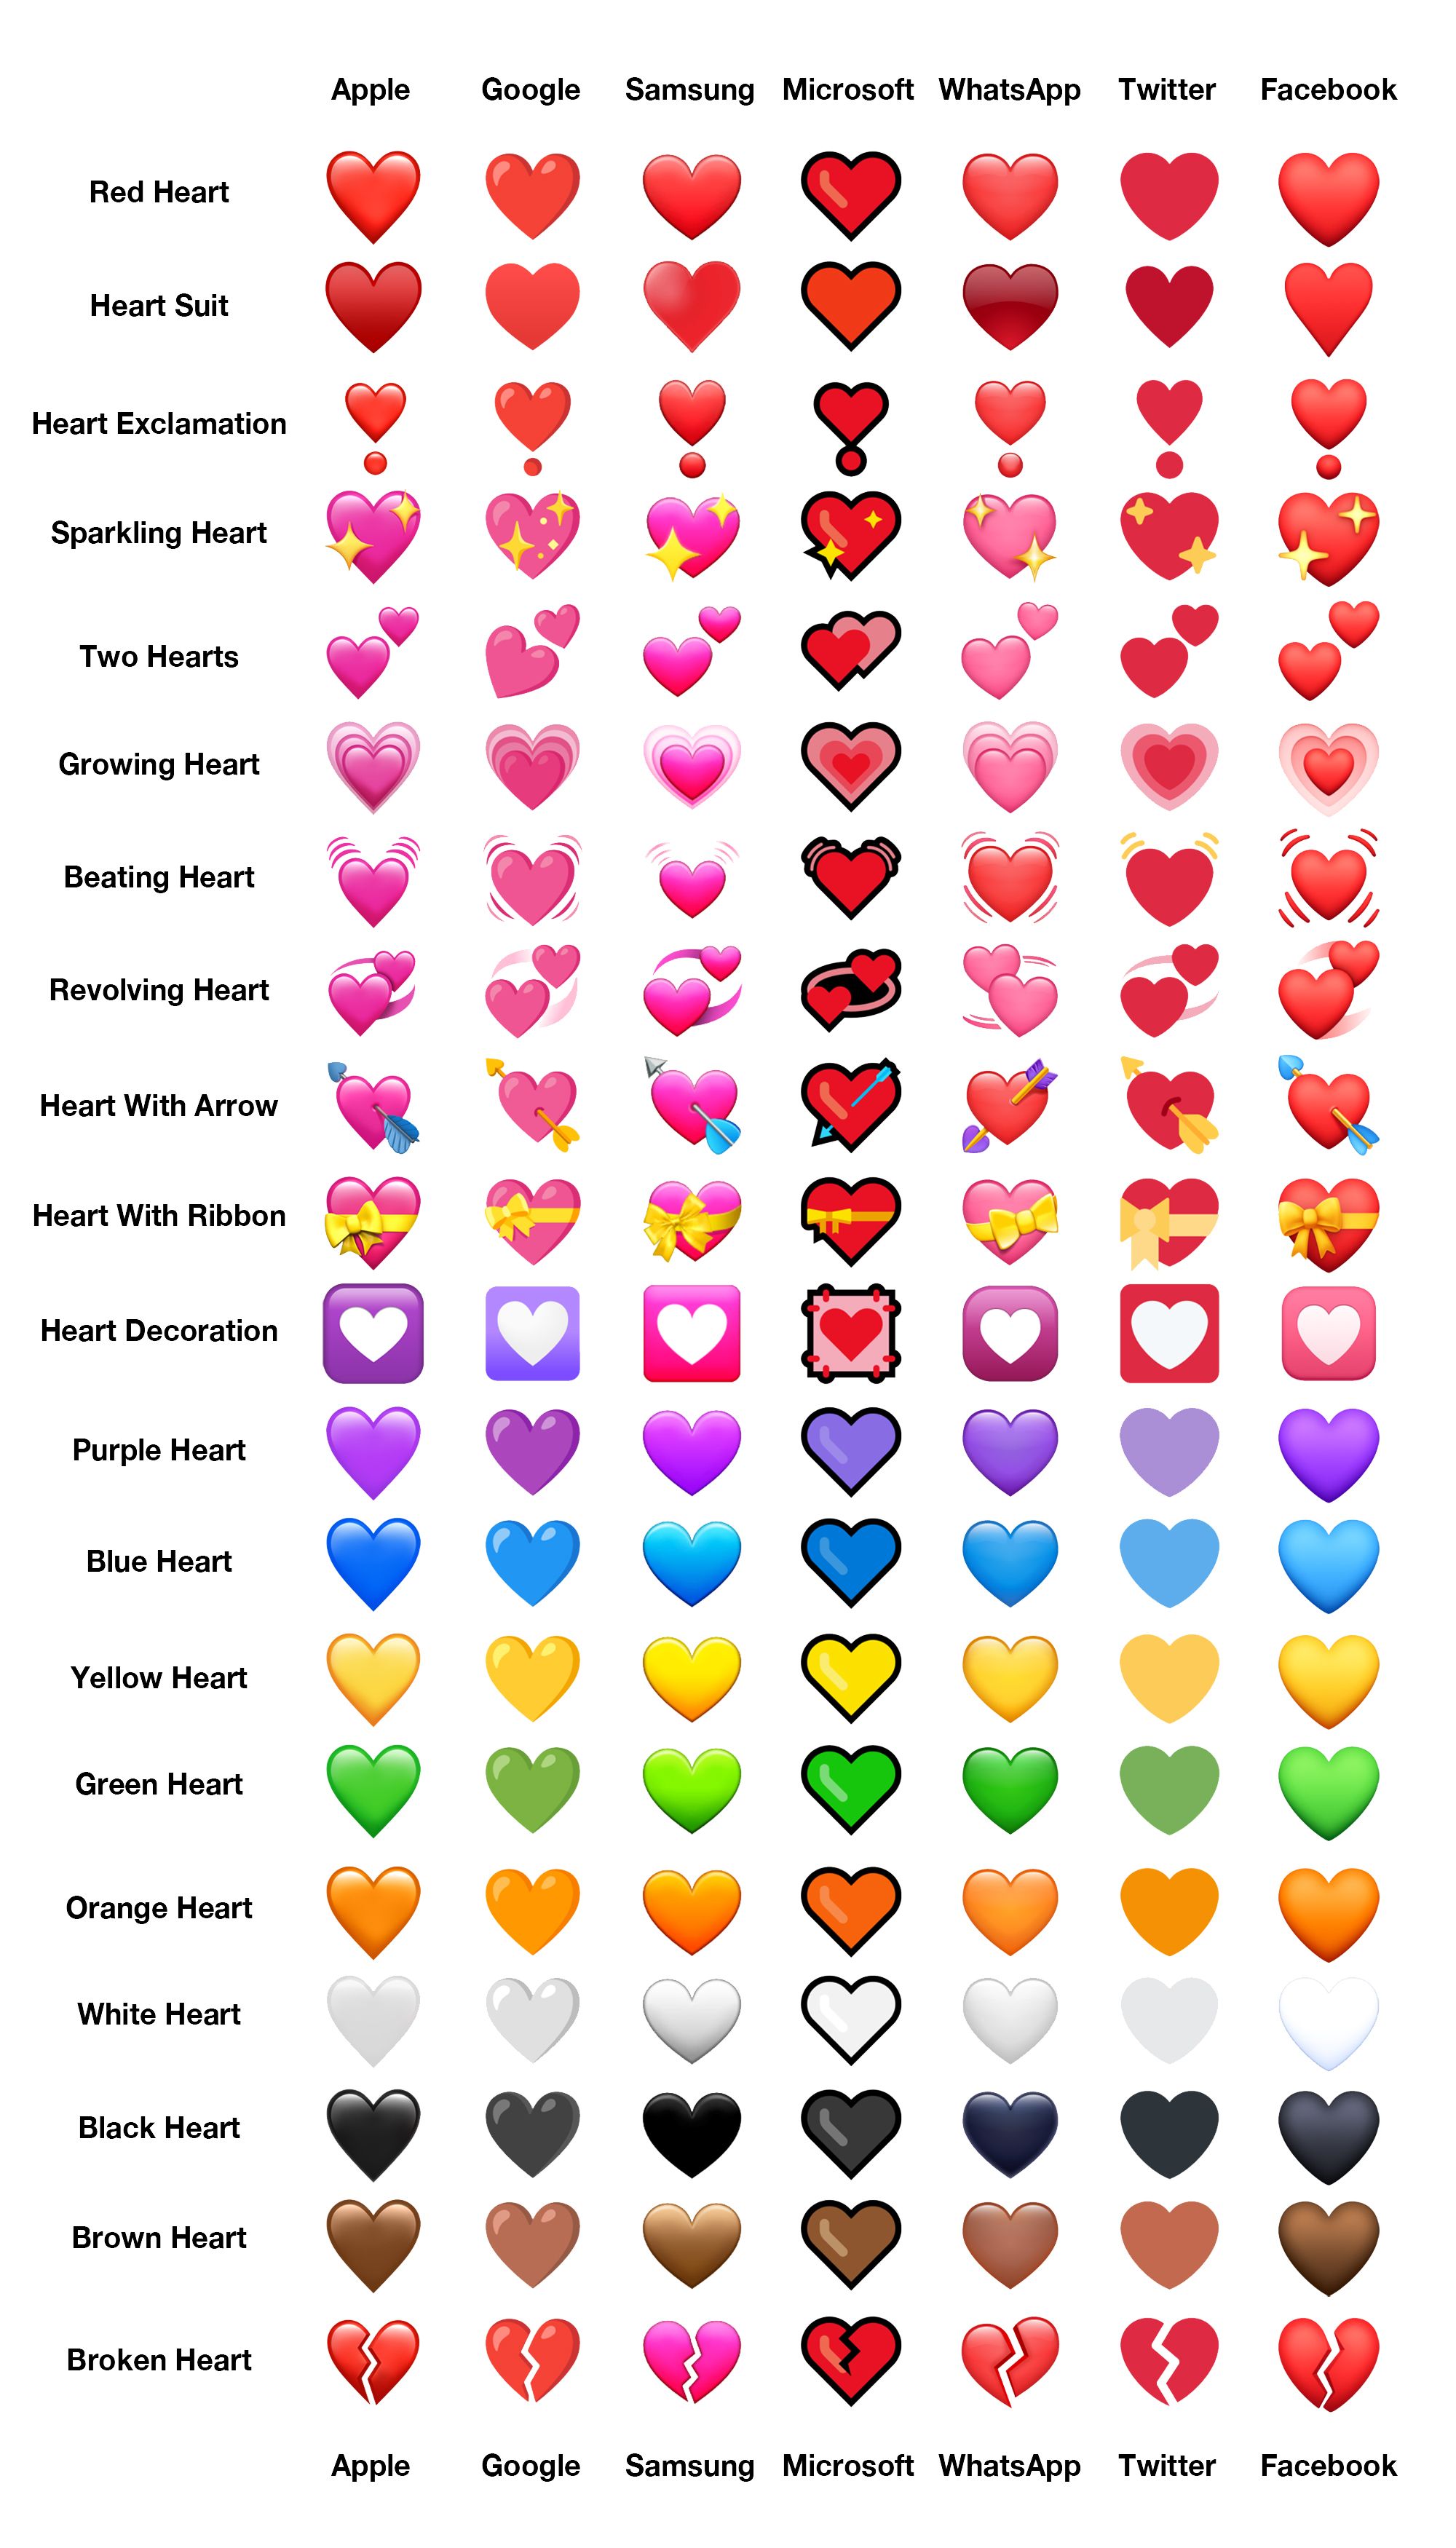 Tilståelse lommelygter saltet Emojipedia on Twitter: "The most popular heart emoji on Twitter is ❤️ while  💙 is most loved by brands https://t.co/o6IM0YPk6i https://t.co/rcYyFDJRHr"  / Twitter